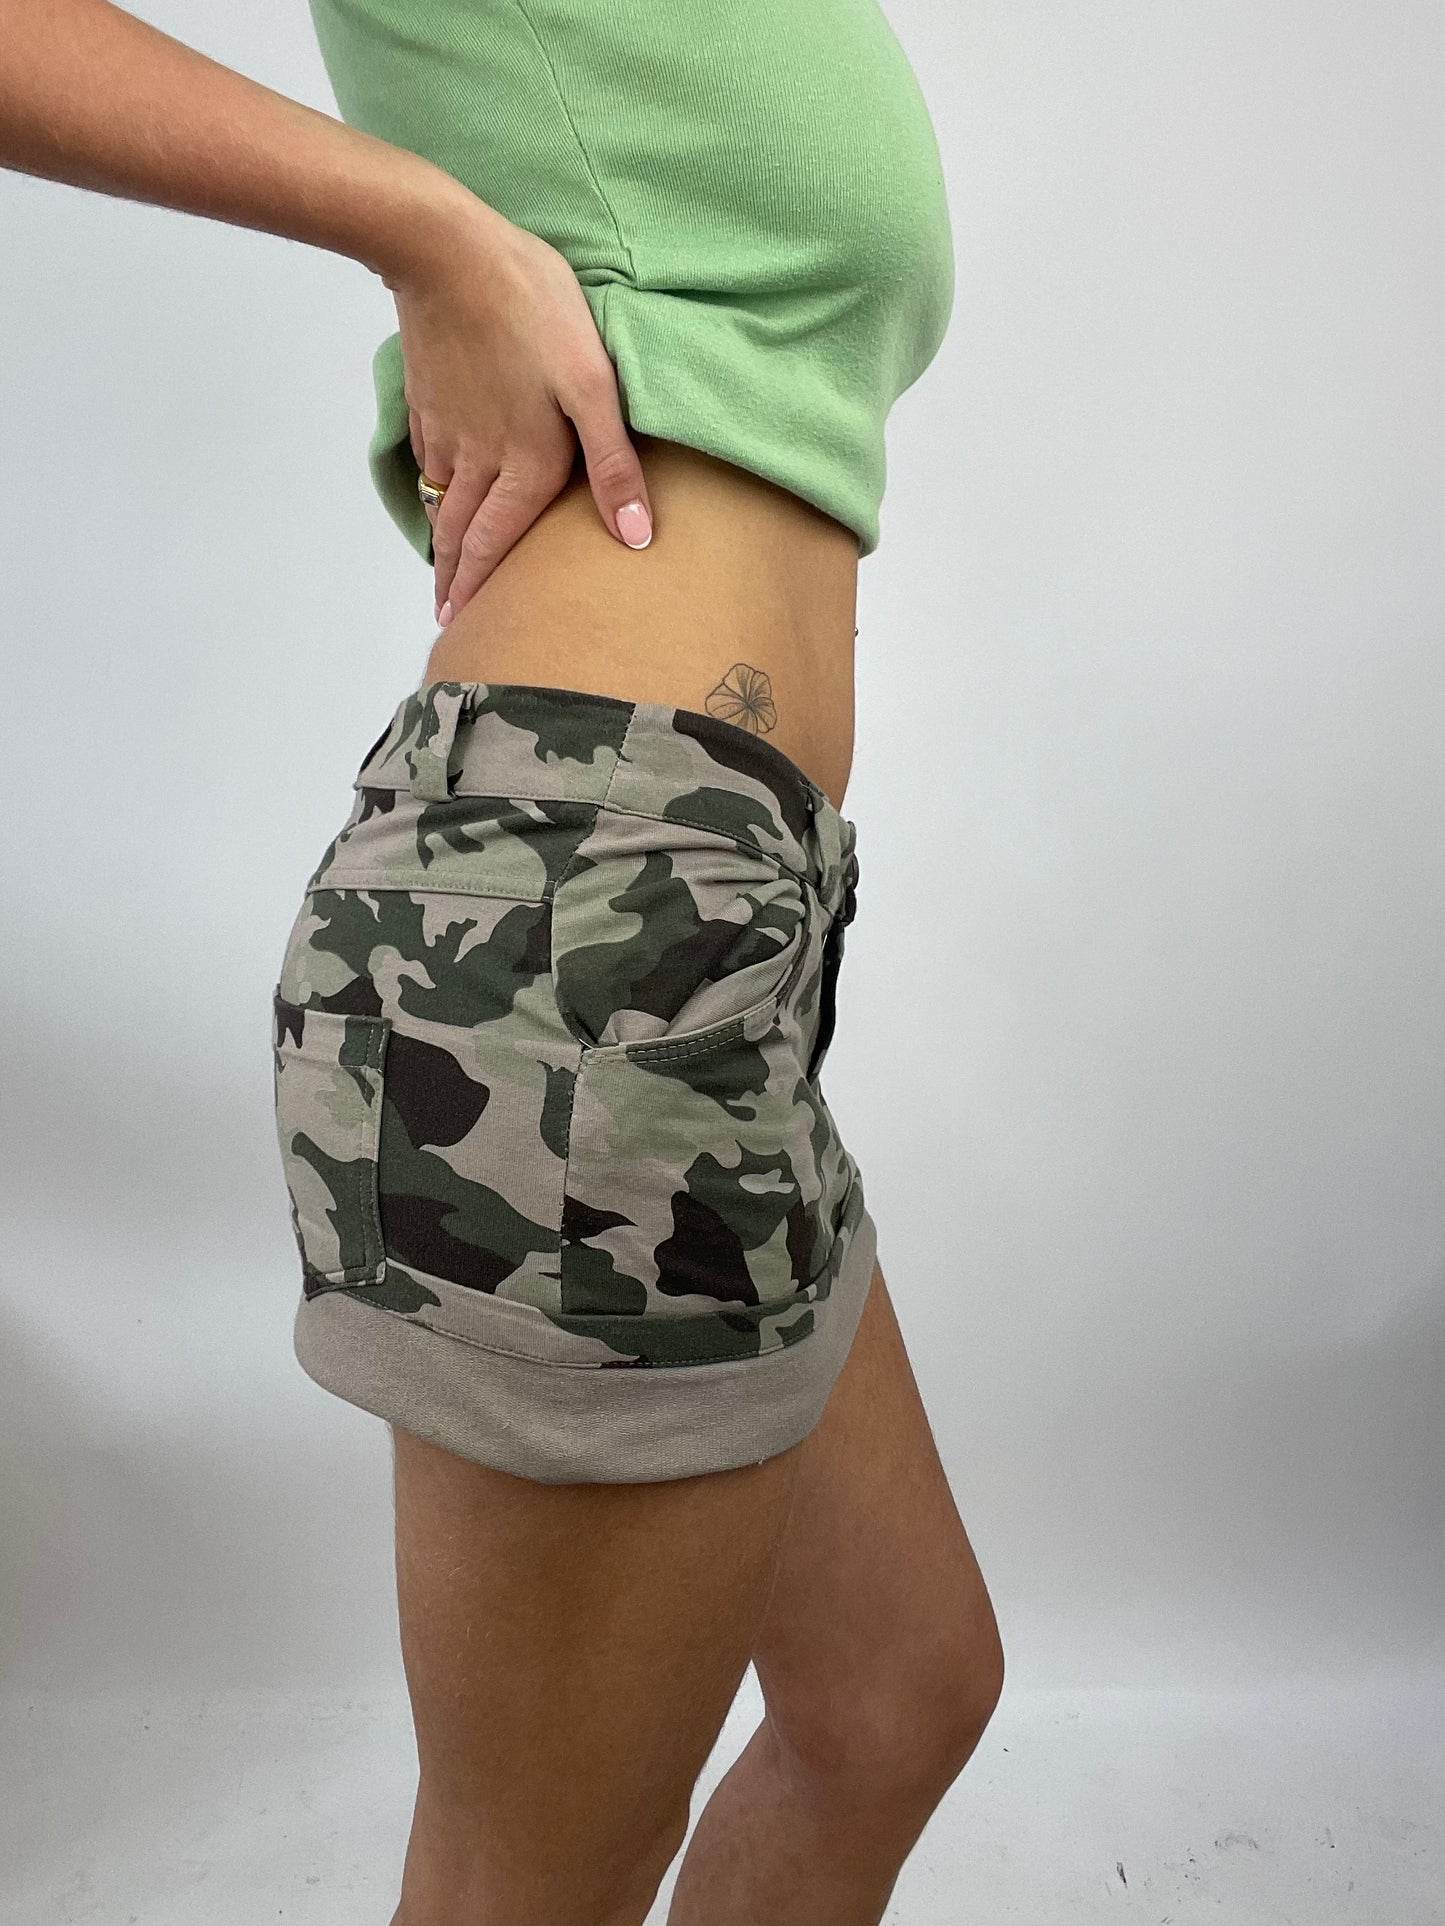 ADDISON RAE DROP | small camo stretchy mini skirt